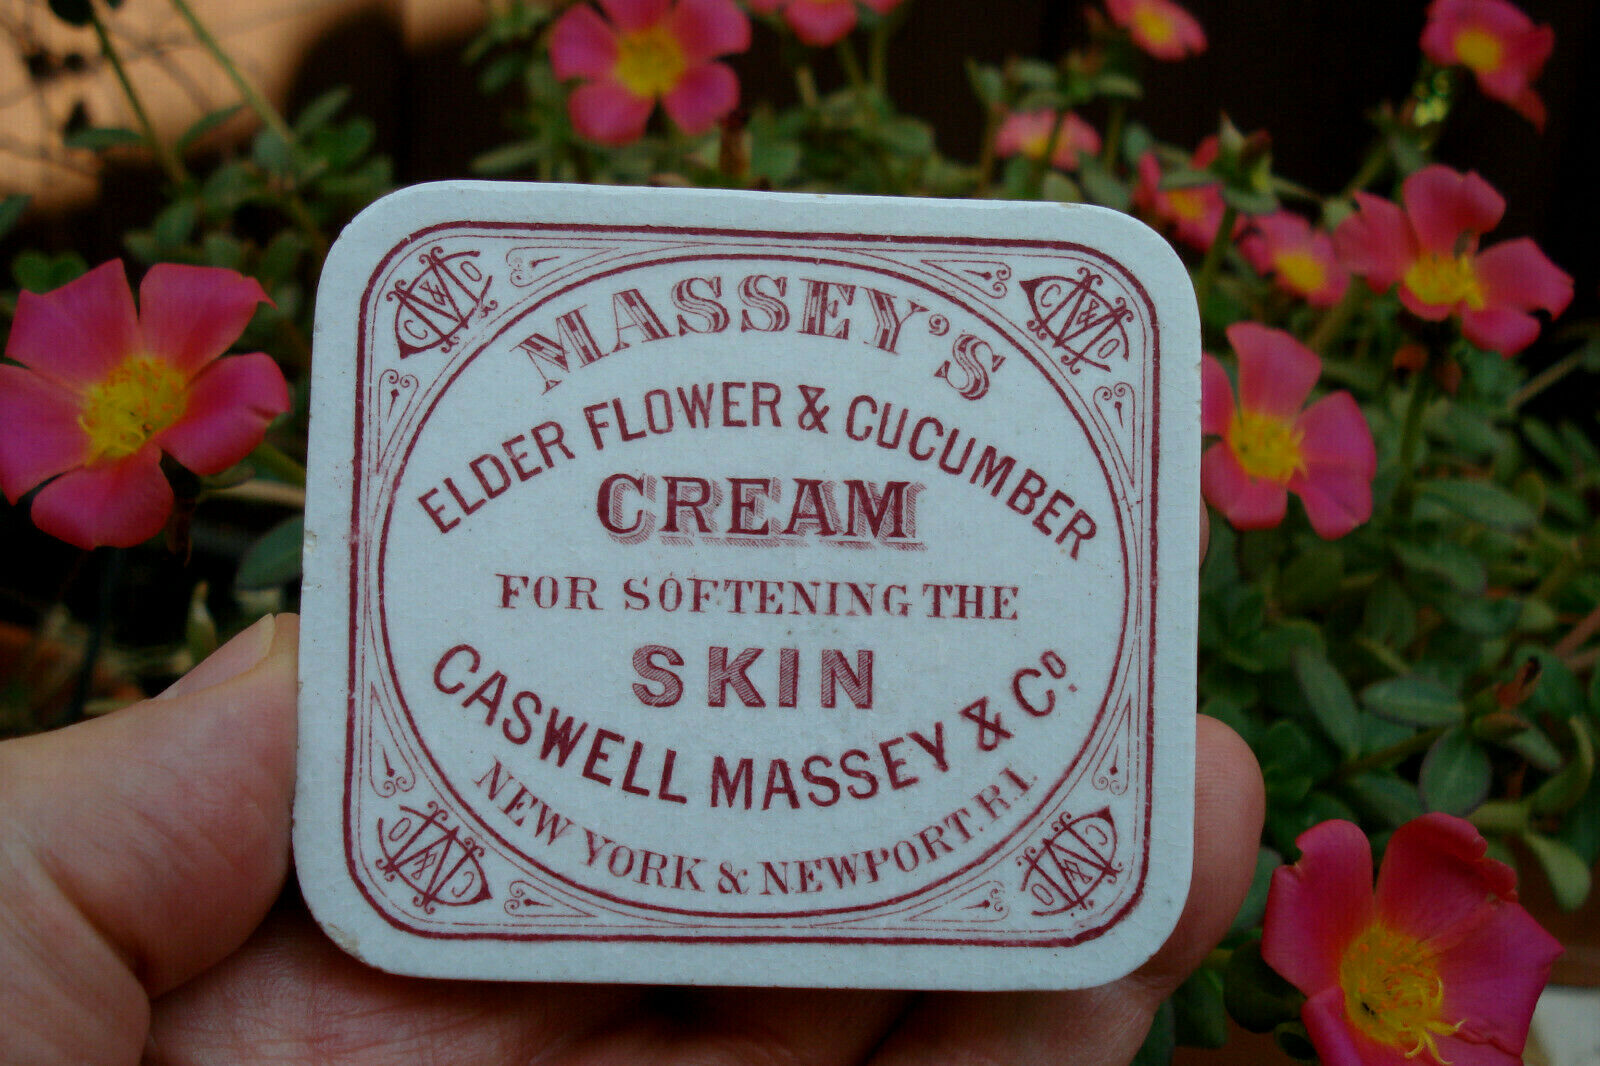 Antique,c1880 Caswell Massey, New York & Newport Rhode Island Skin Cream Pot Lid